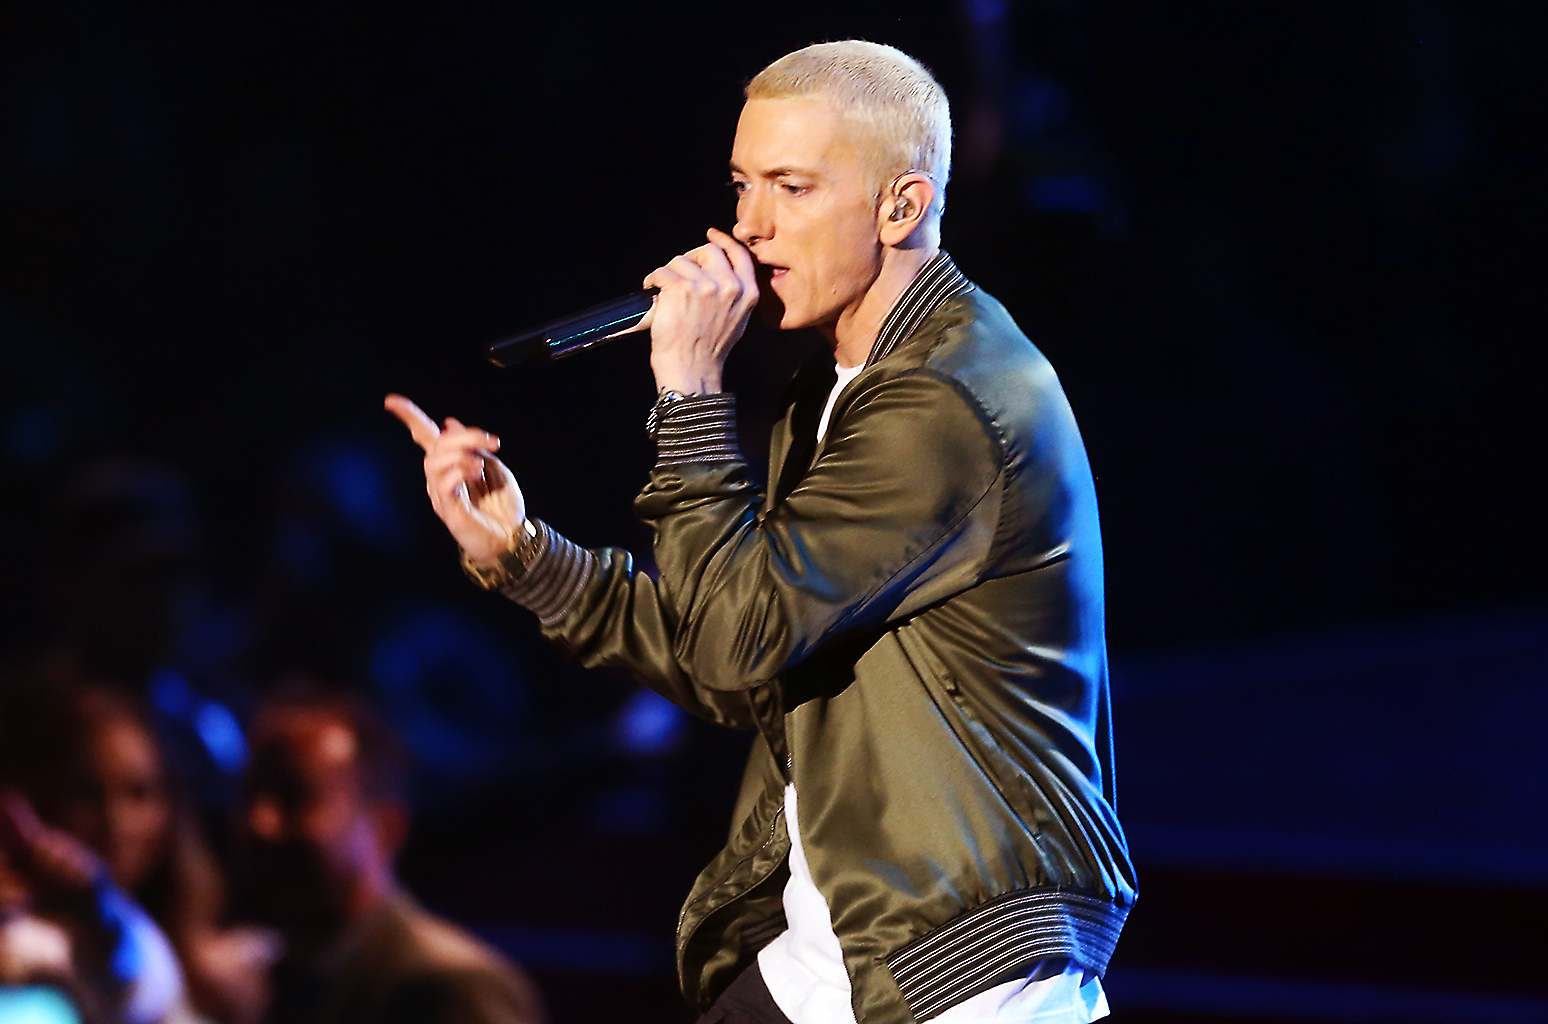 Eminem comparte un disco sorpresa ‘Kamikaze’. Cusica Plus.